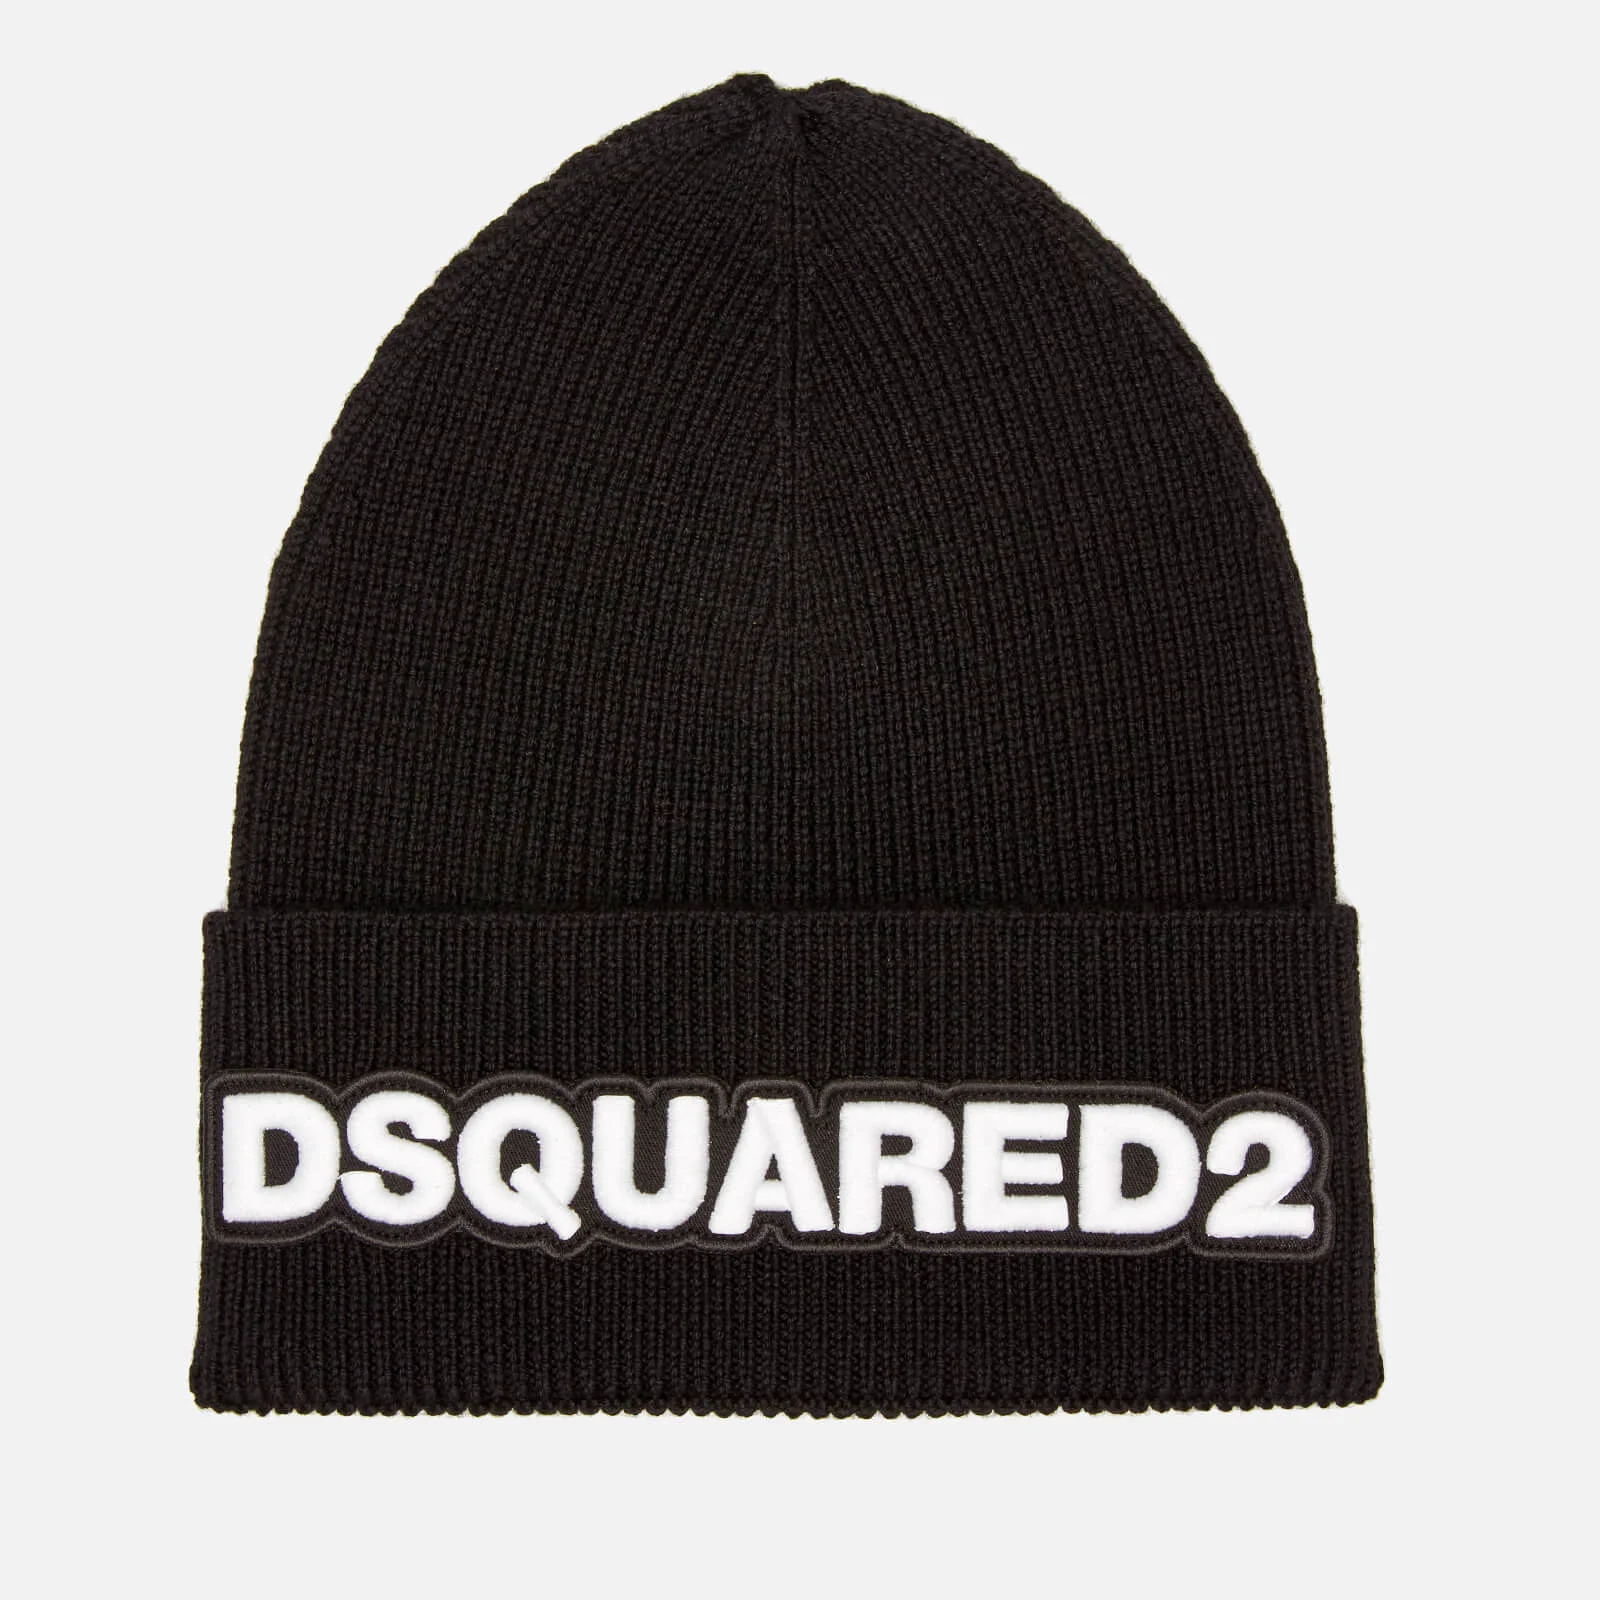 Dsquared2 Men's Dsquared Knit Hat - Black/White Image 1